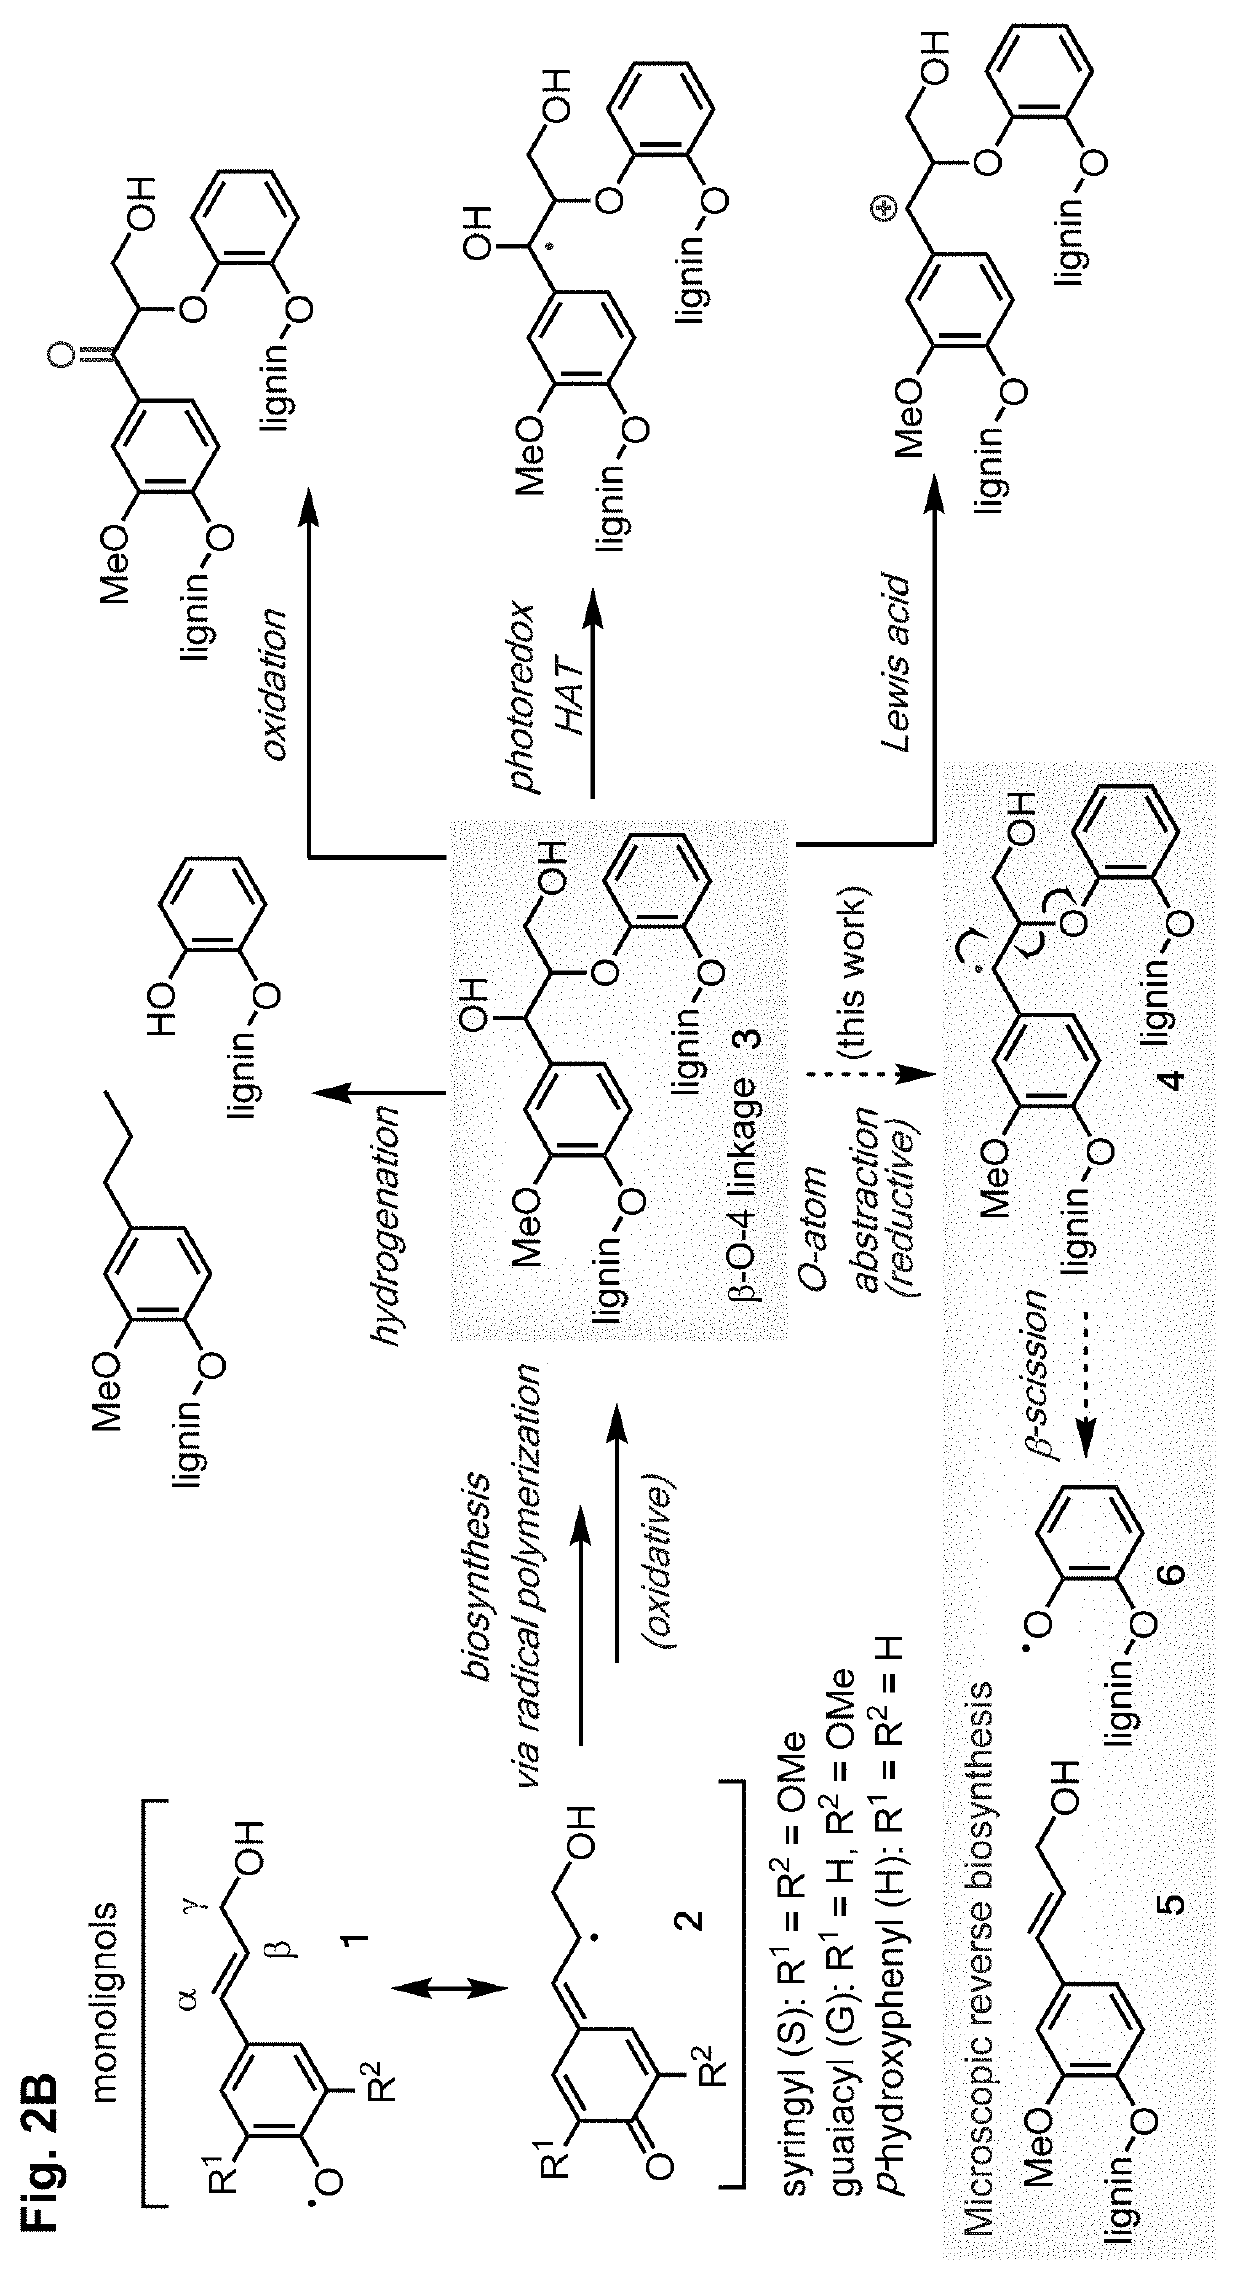 Depolymerization and valorization of a biopolymer